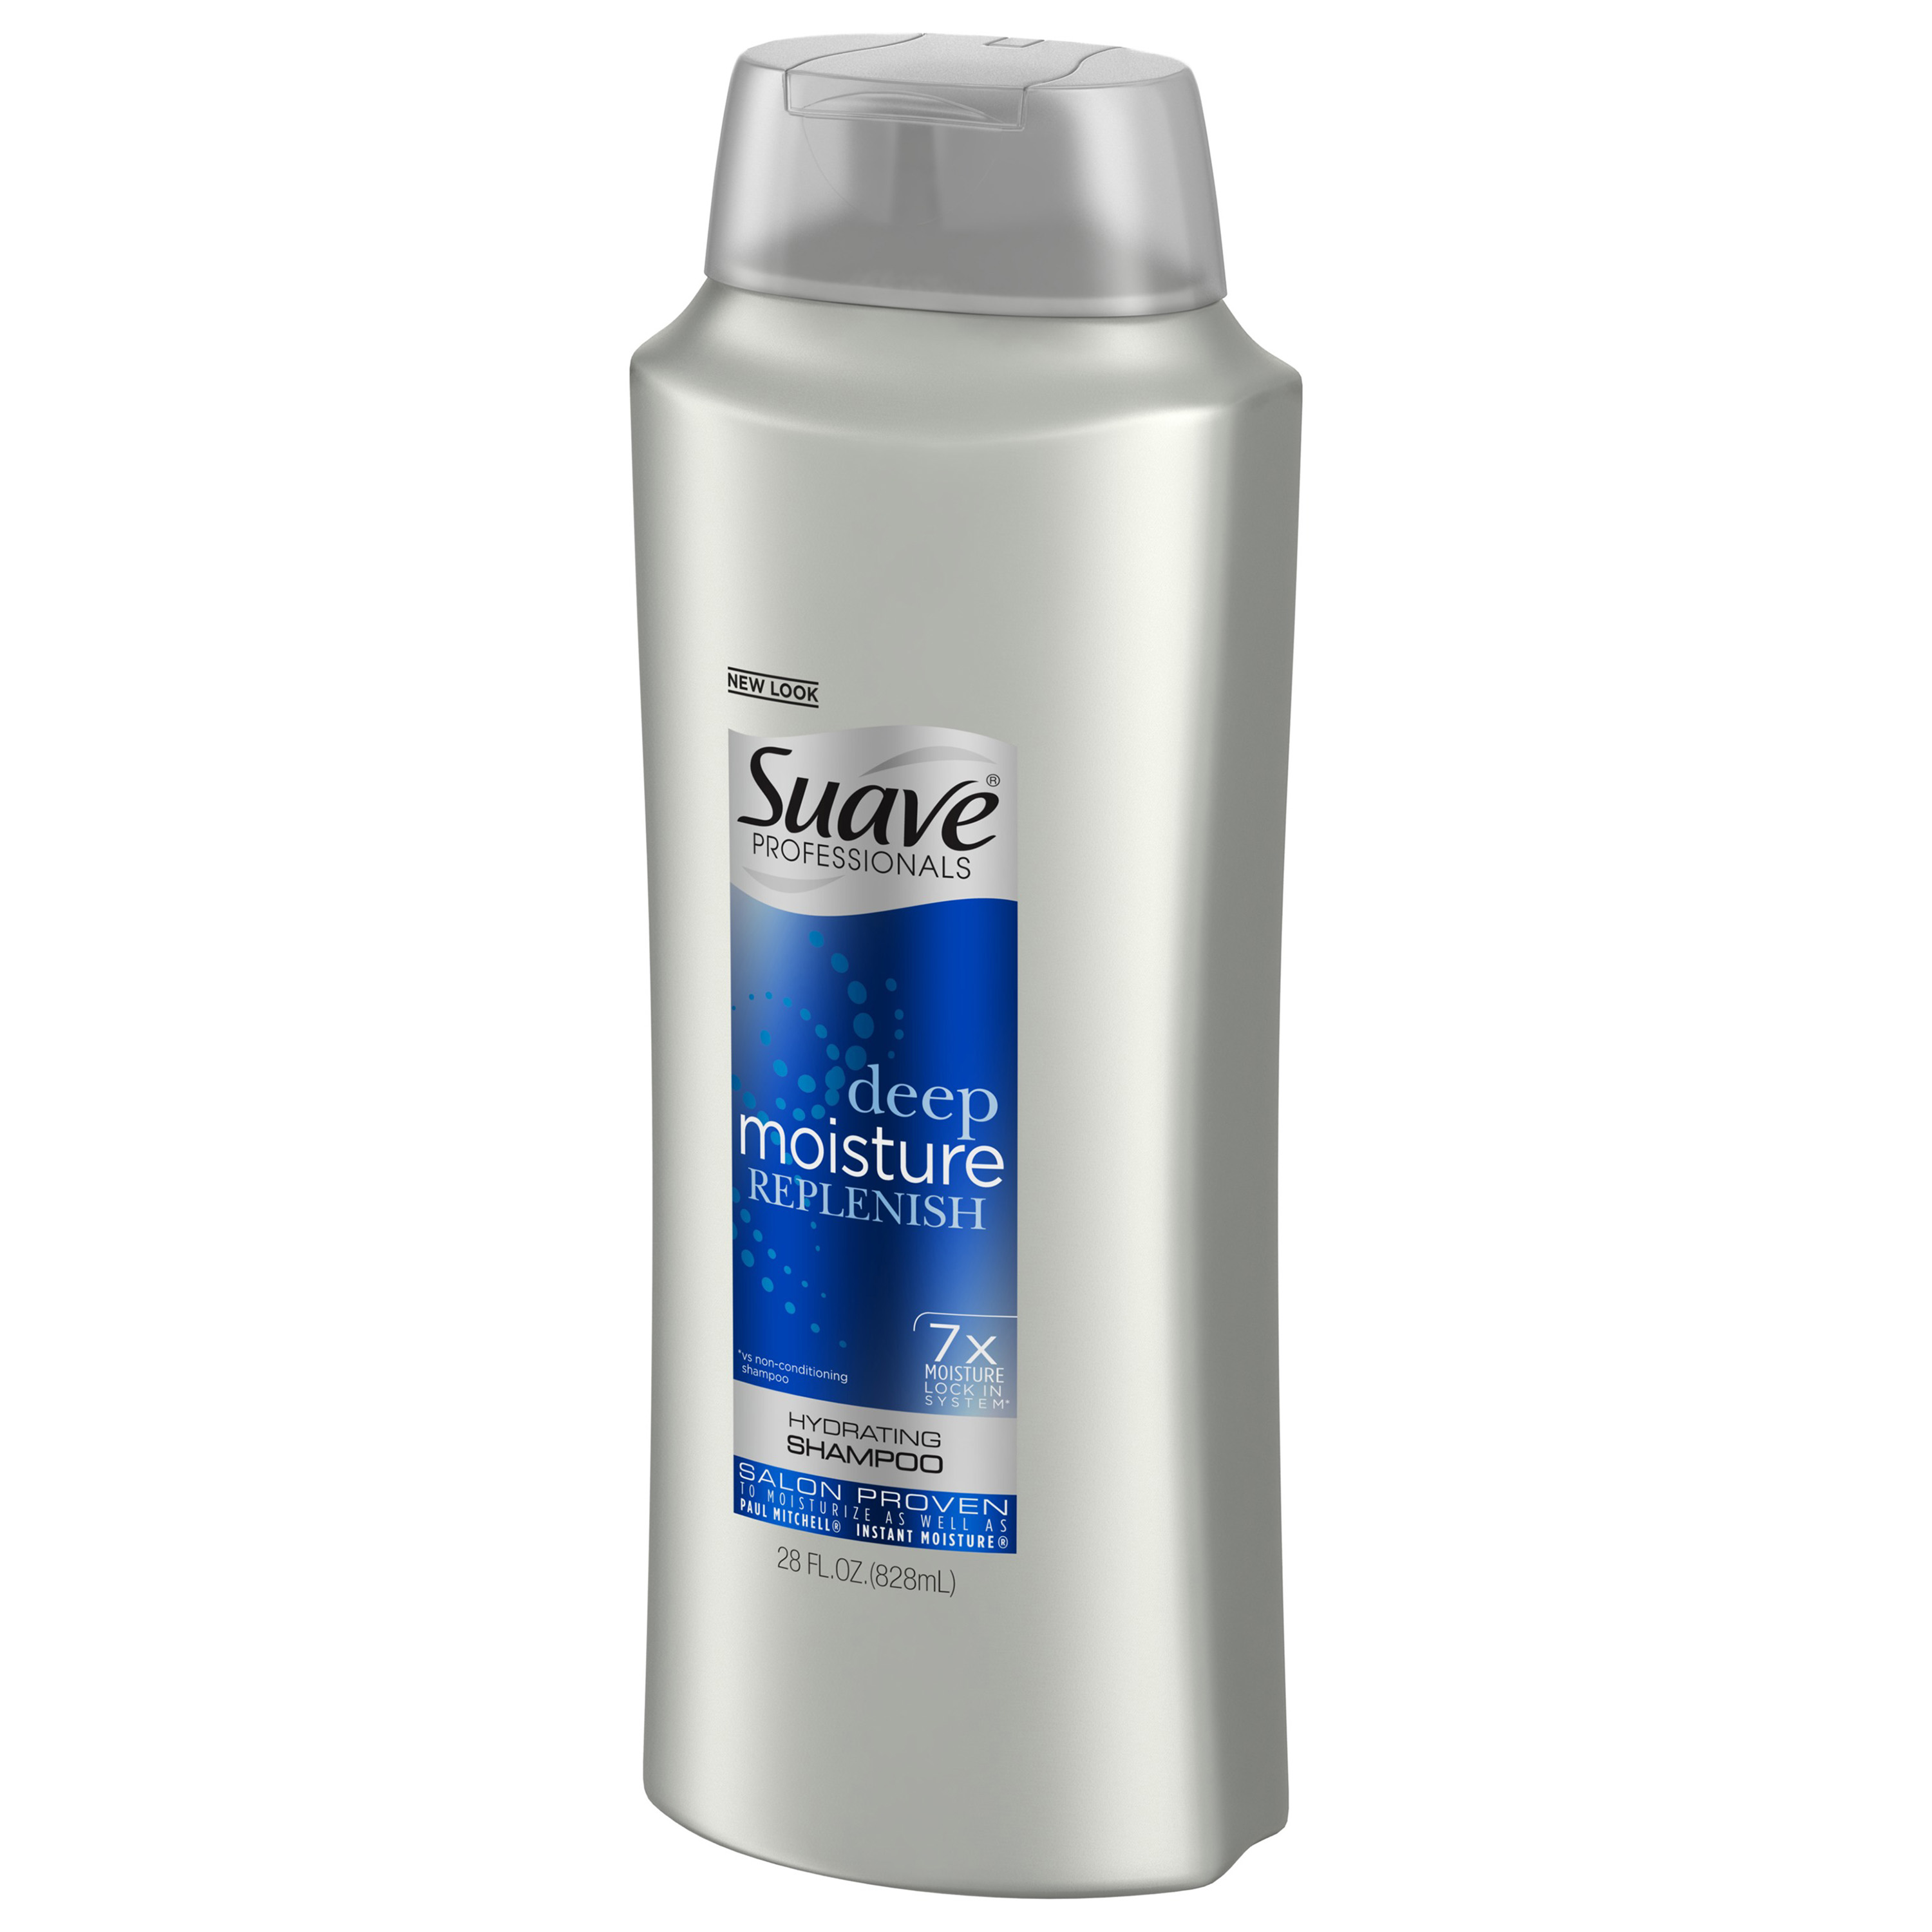 Suave Professionals Deep Moisture Shampoo, 28 oz - image 5 of 7